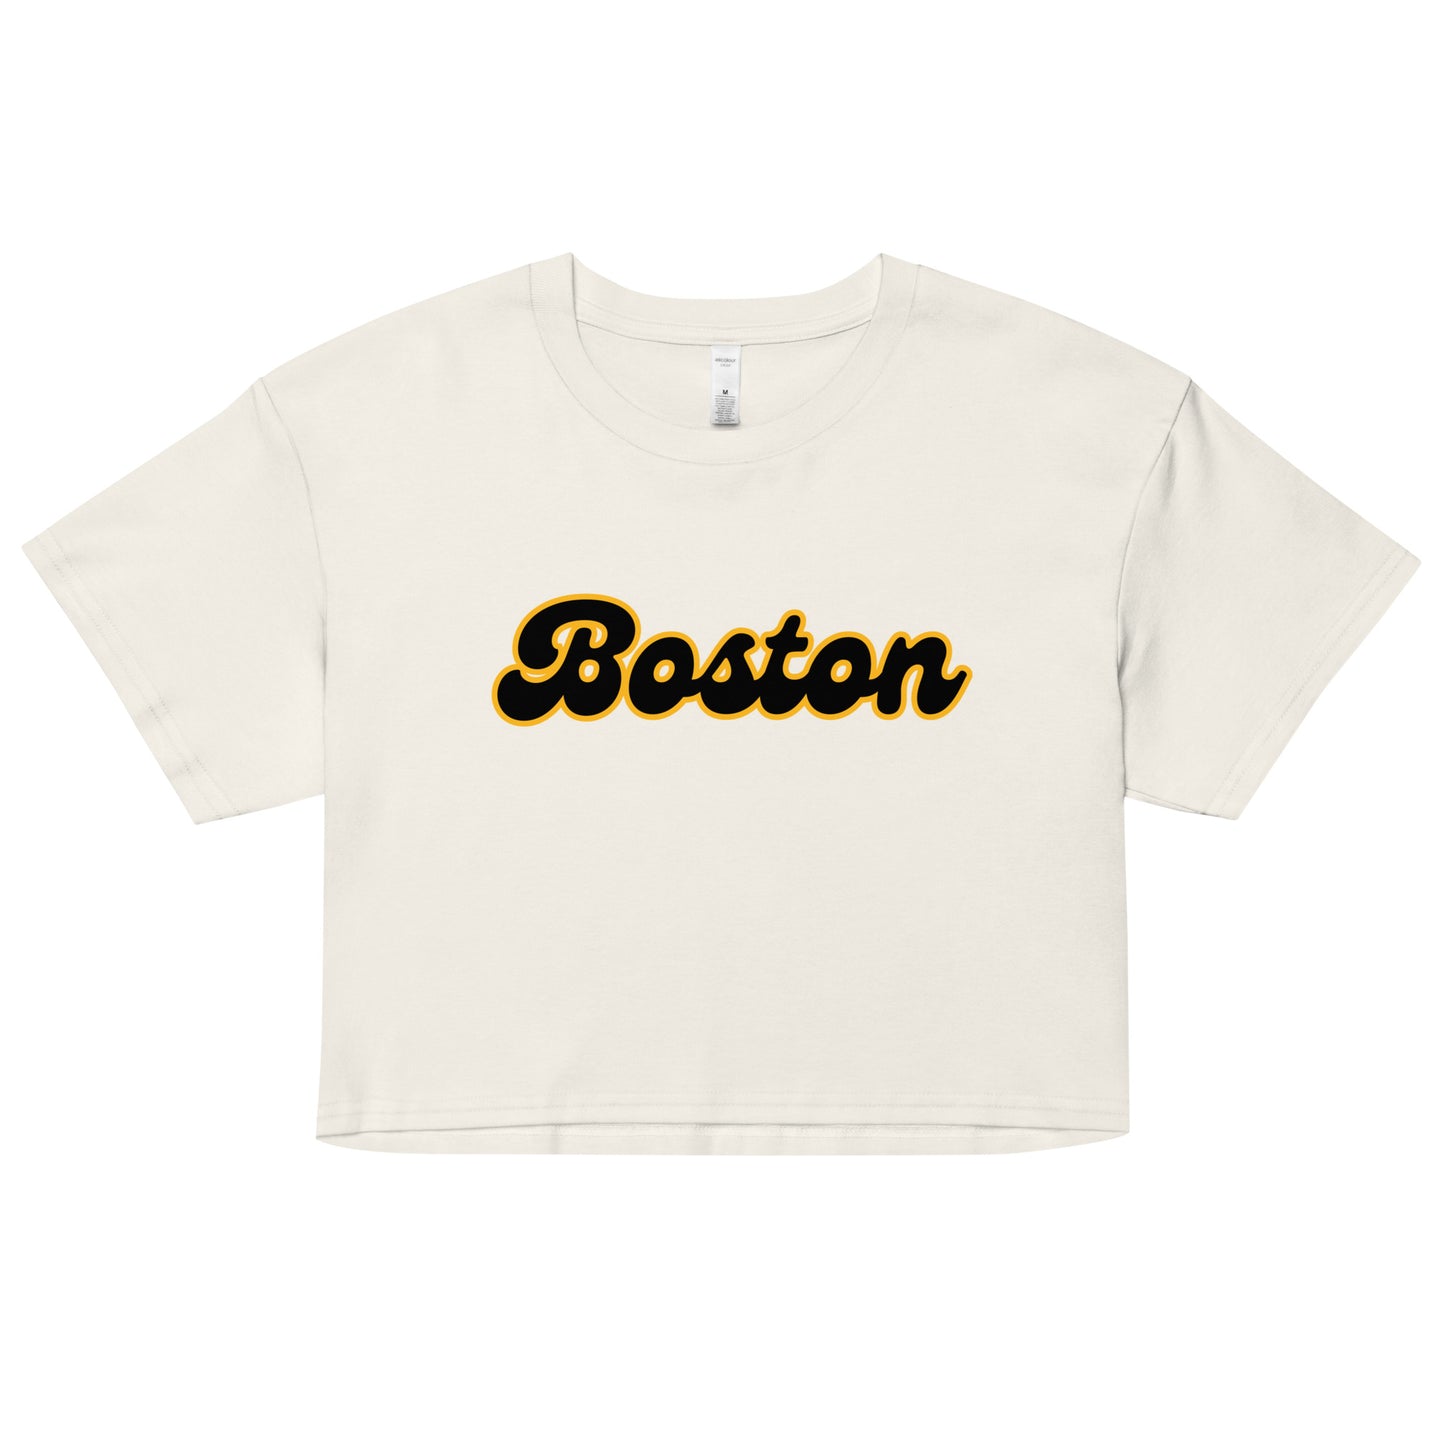 Retro Black and Gold Boston Crop Top